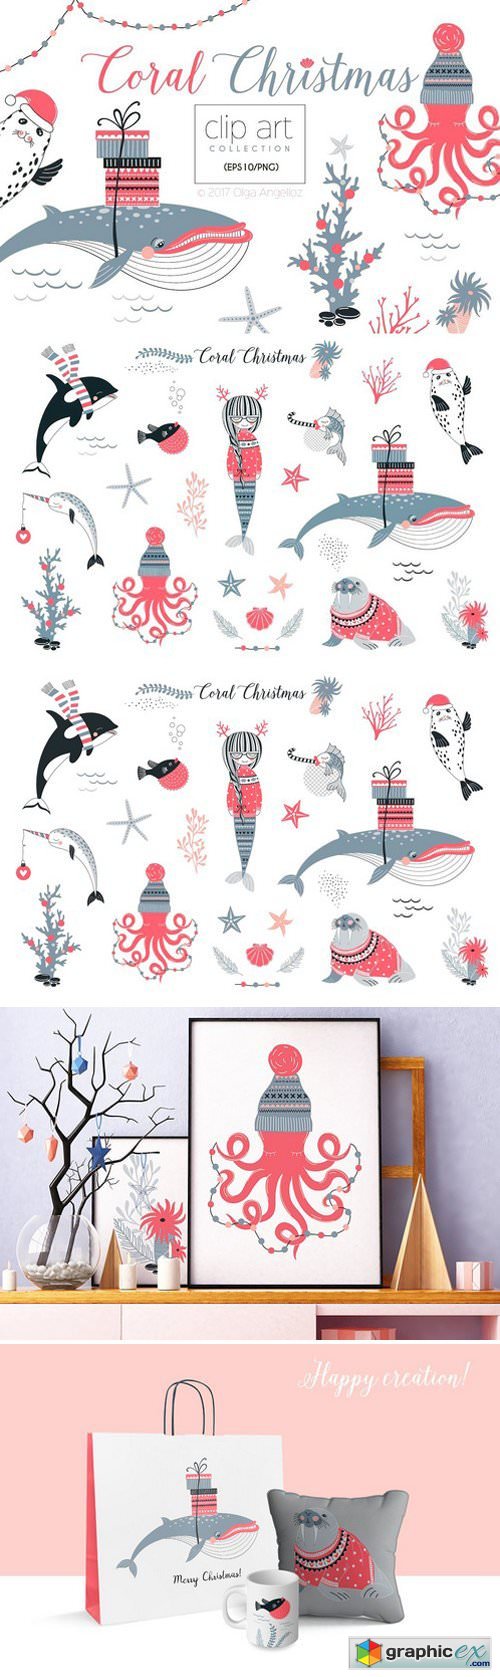 Coral Christmas clip art collection